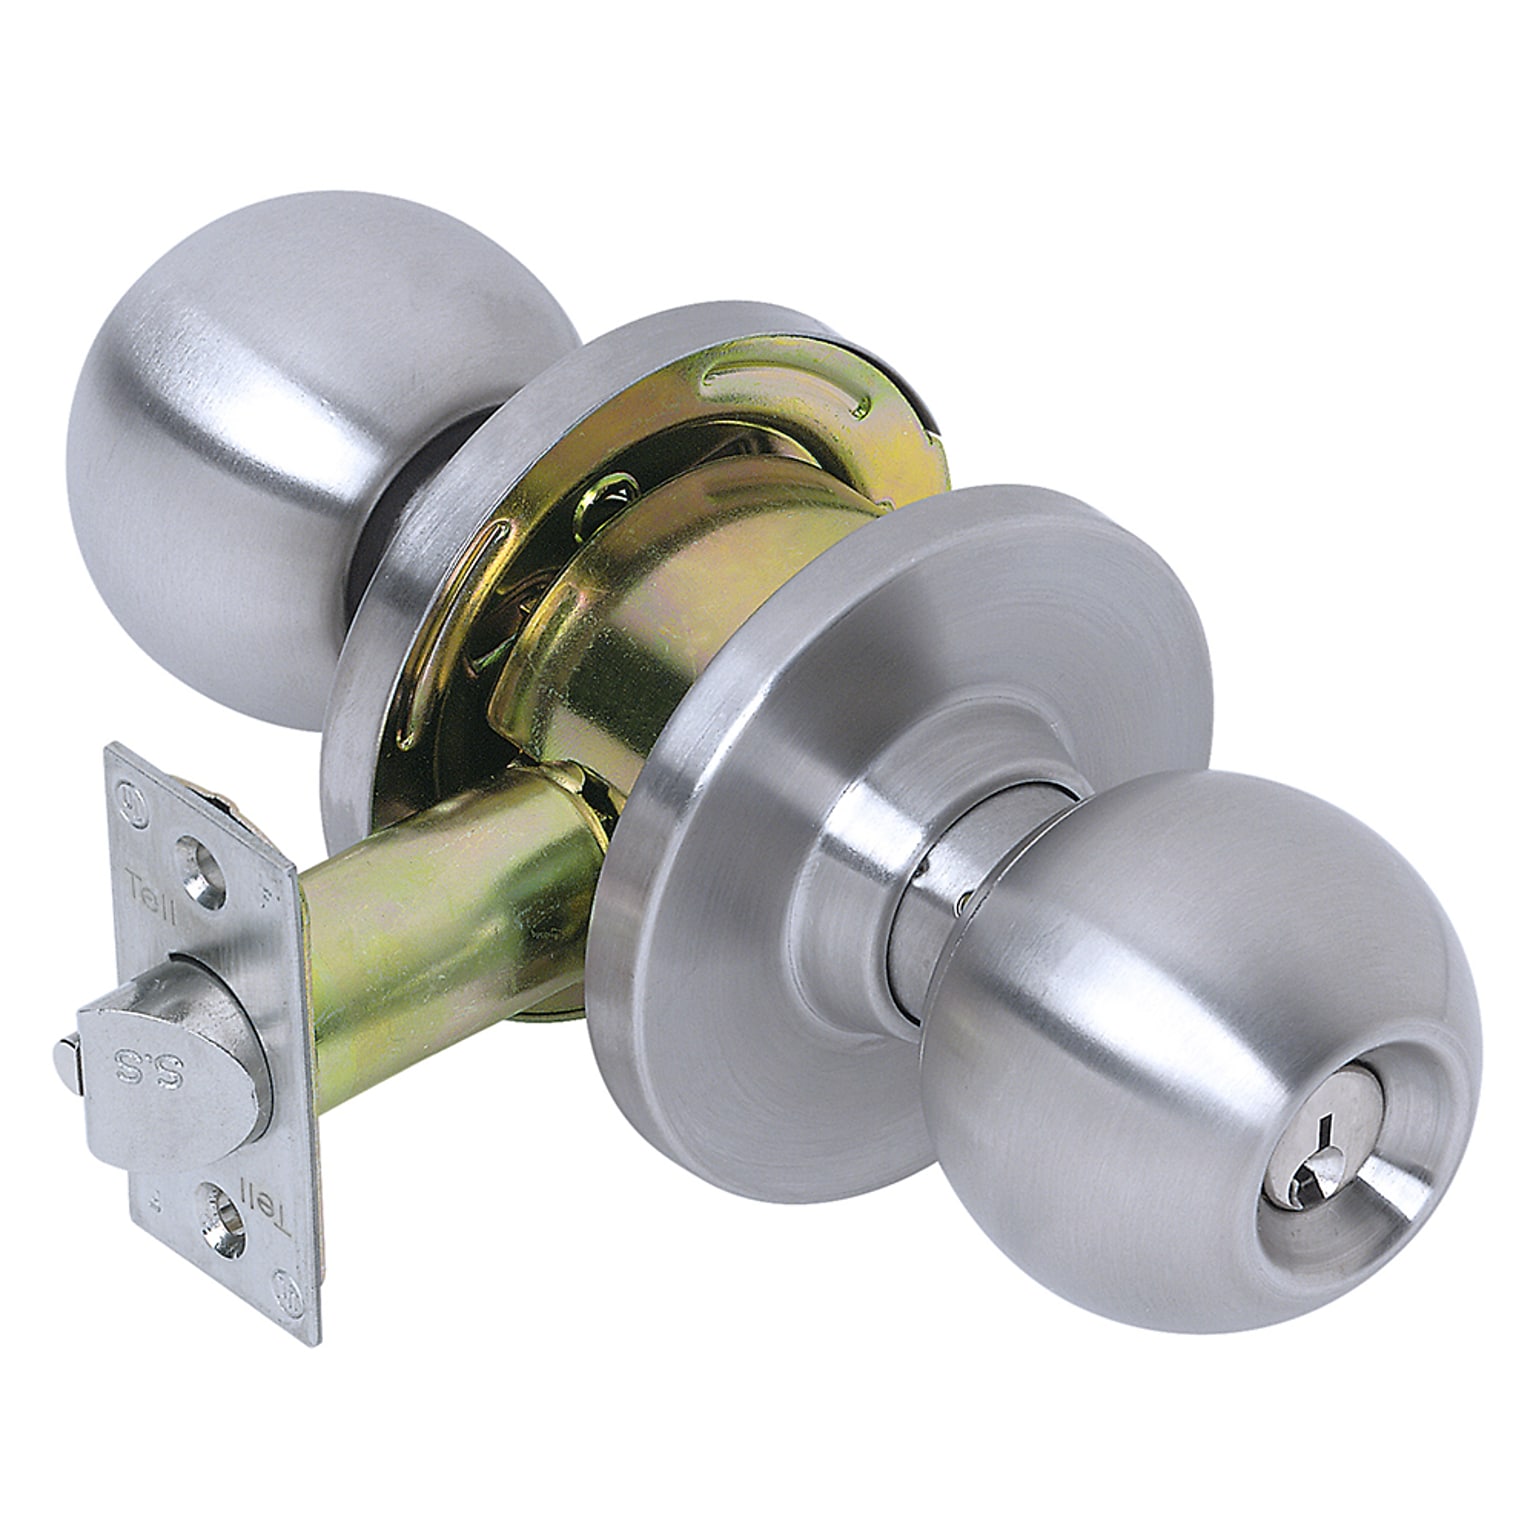 Tell Heavy Duty Commercial Storeroom Knob Lockset, Stainless Steel Finish 32D (CL100045)